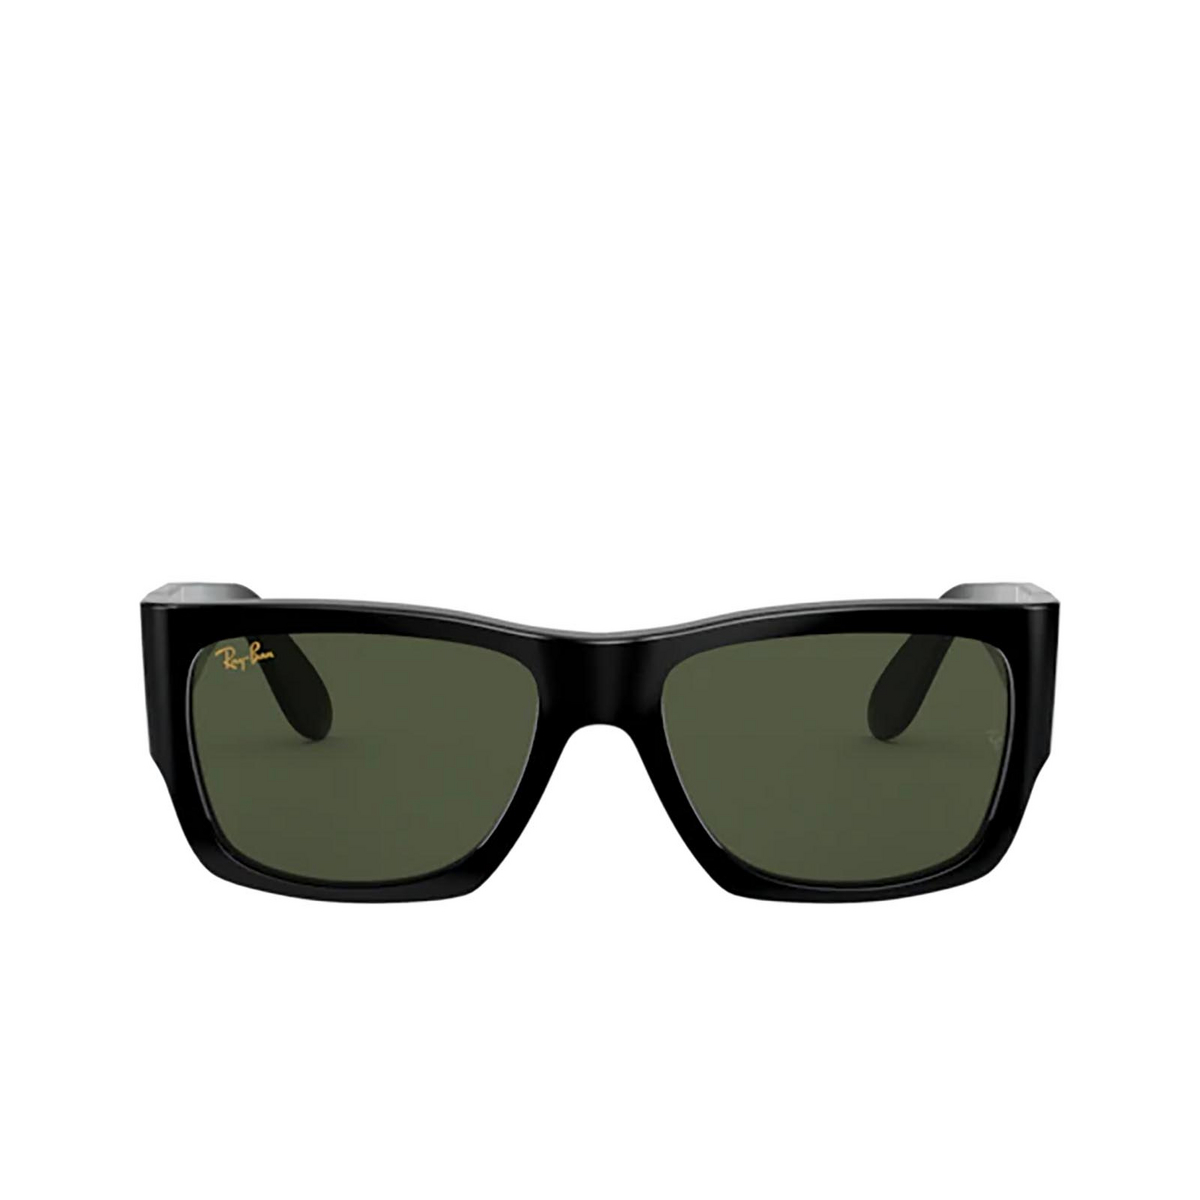 Ray-Ban WAYFARER NOMAD Sunglasses 901/31 Shiny Black - front view